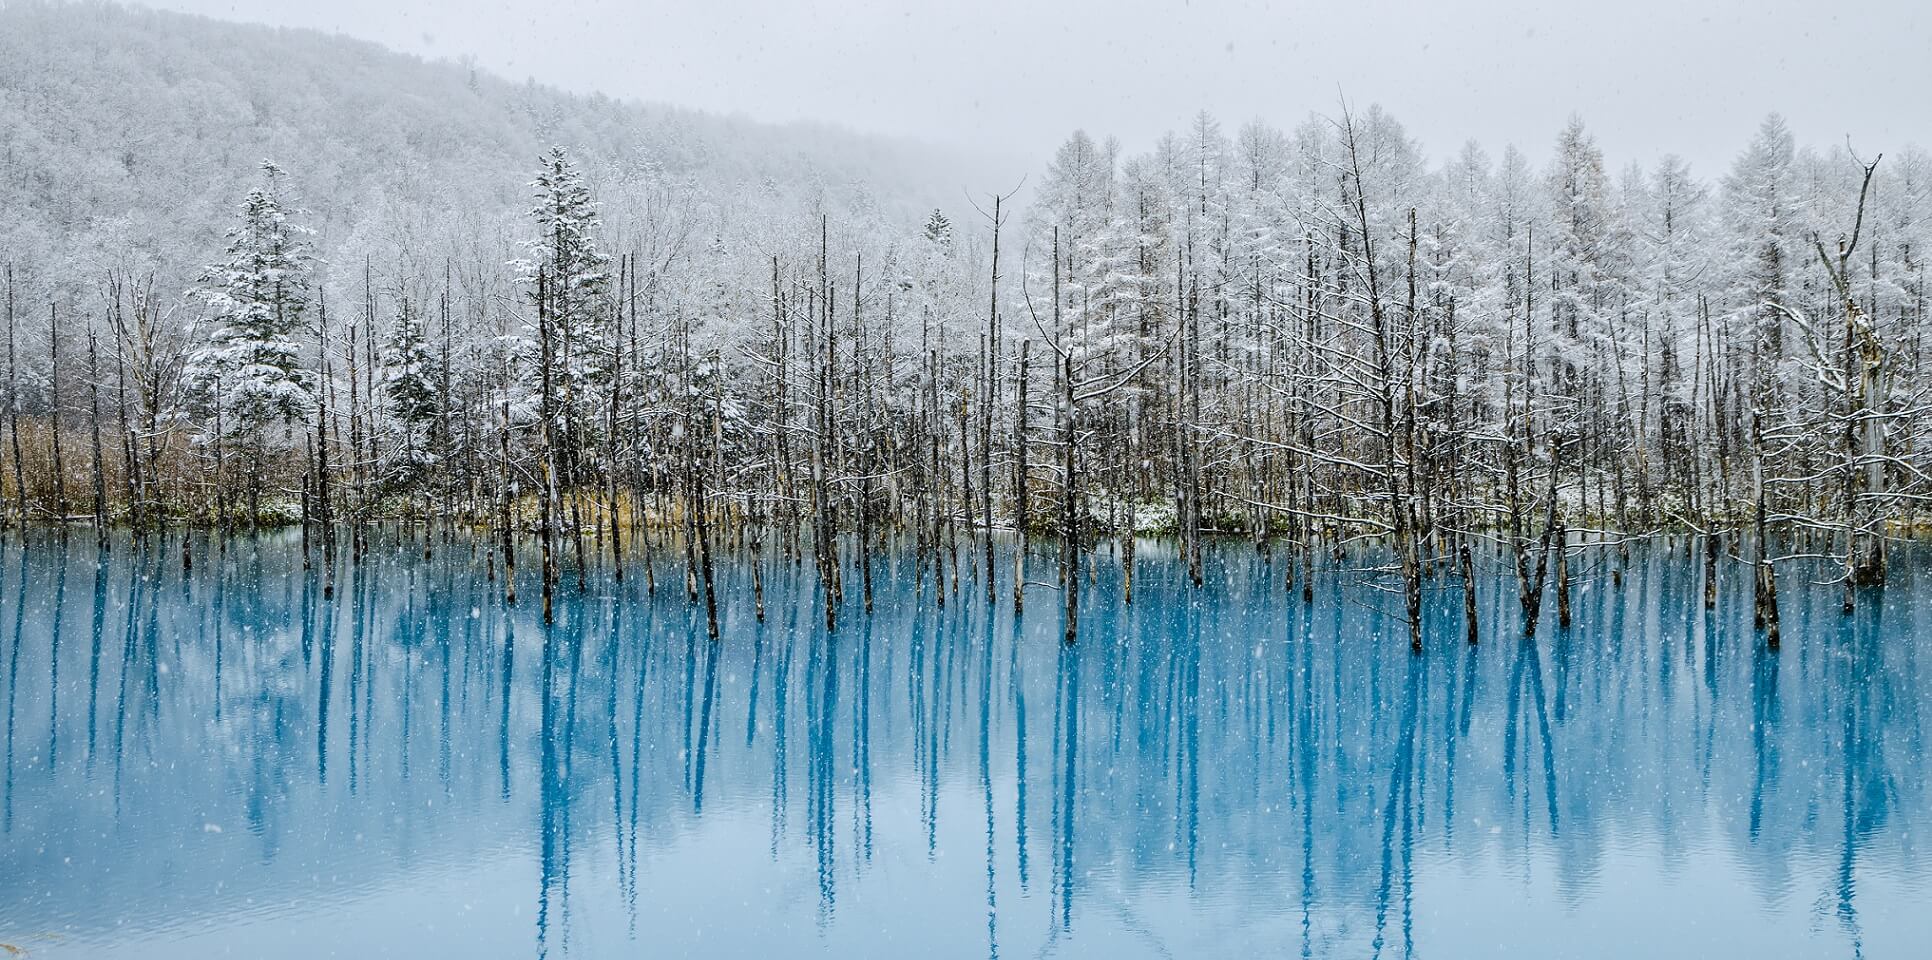 Footer Blue Pond is a man-made water feature in Biei, Hokkaido, Japan